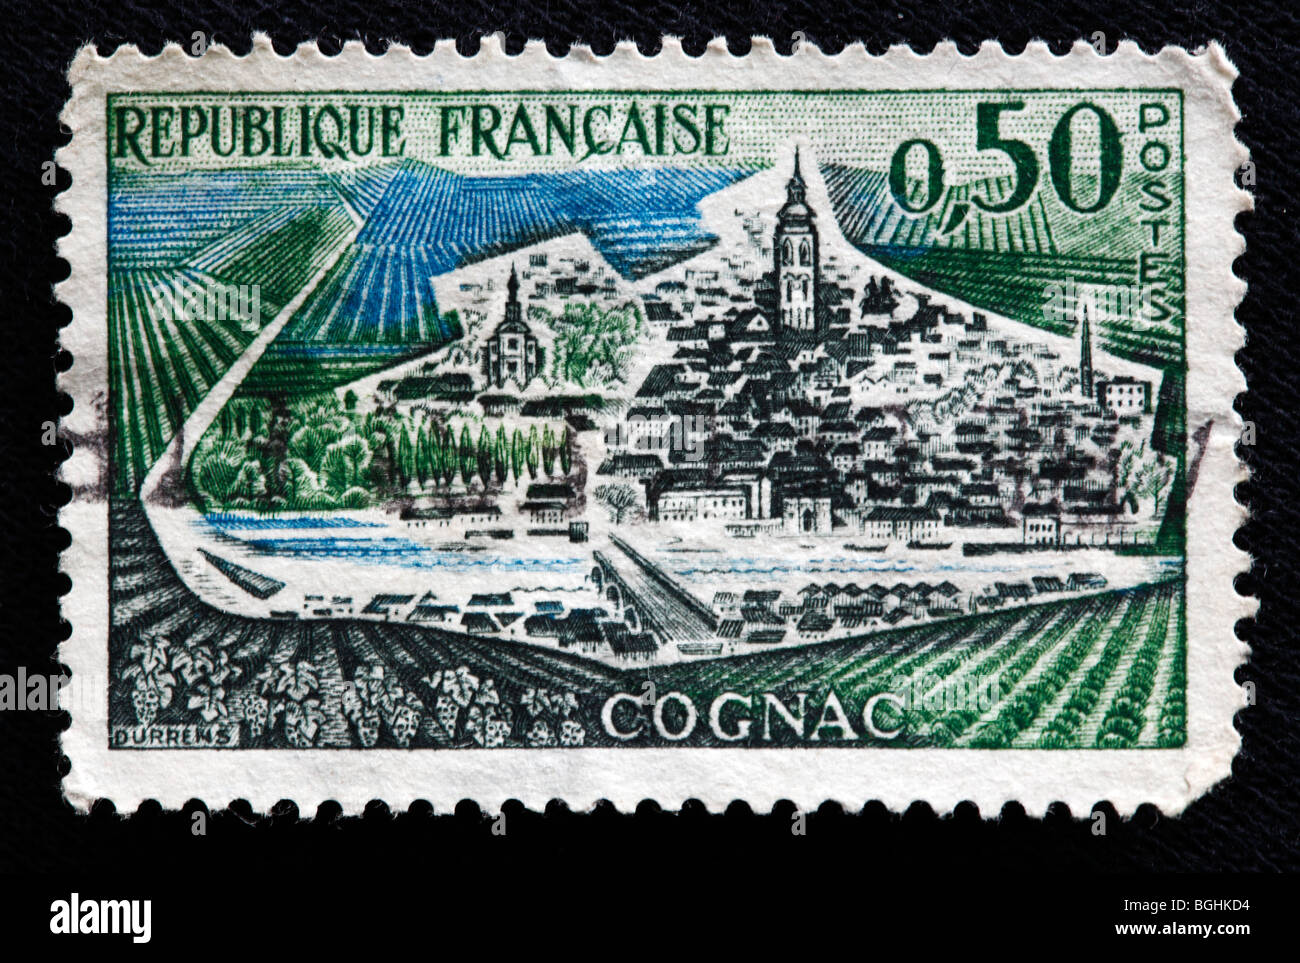 Cognac, Briefmarke, Frankreich, 1960 s Stockfotografie - Alamy